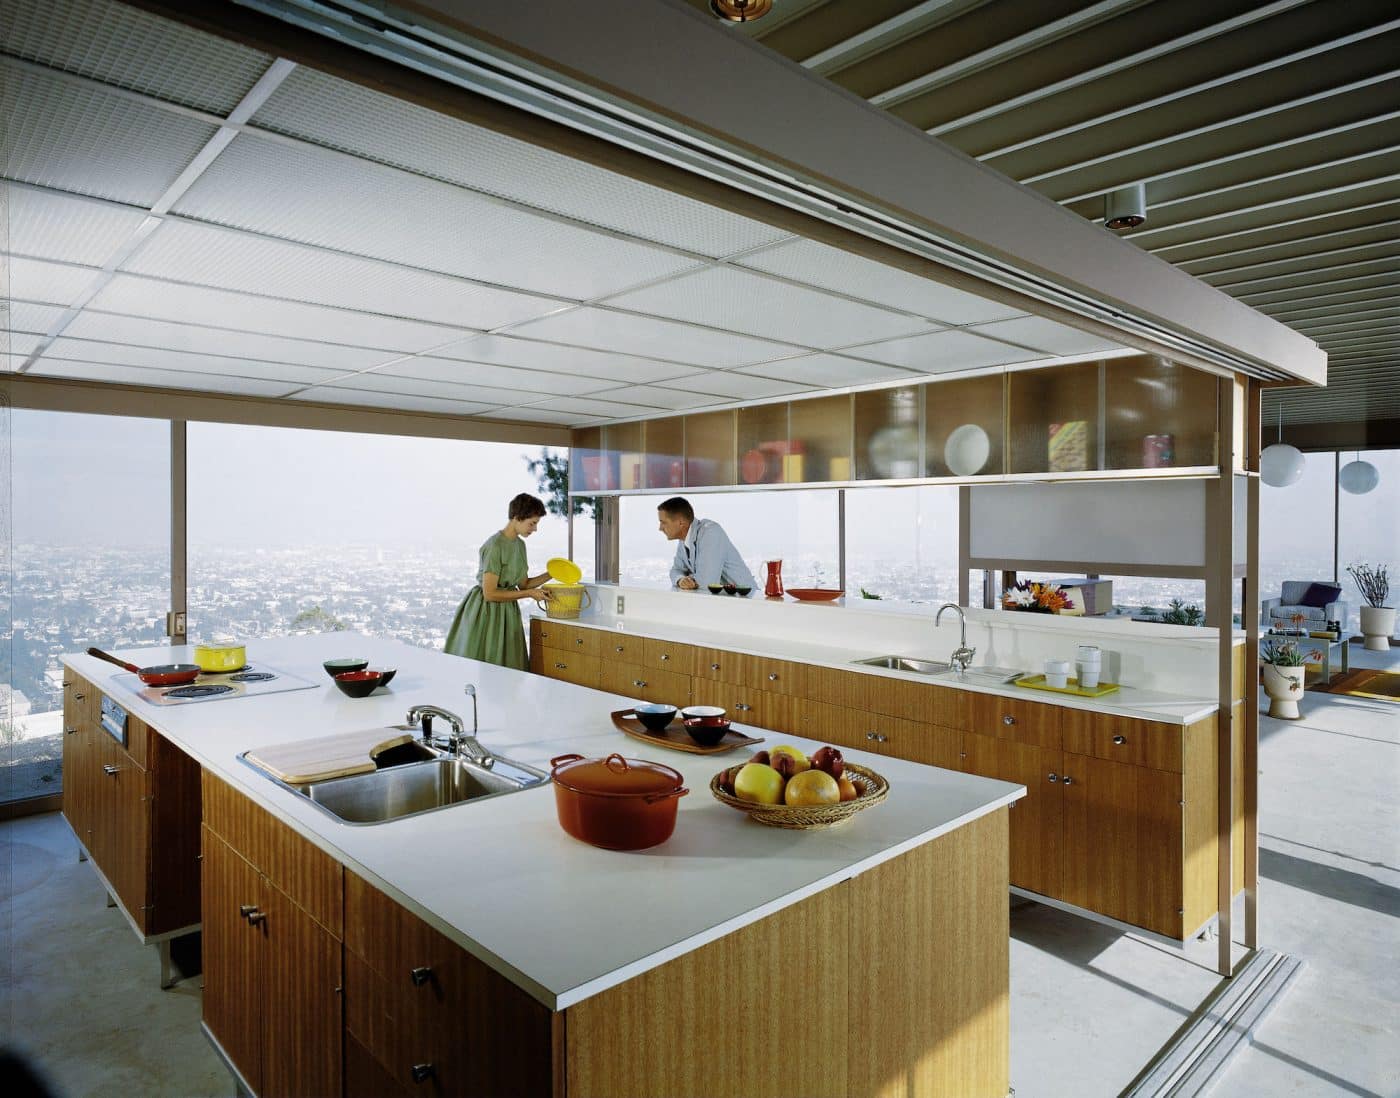 Custom kitchen by Pierre Koenig for Case Study House #22